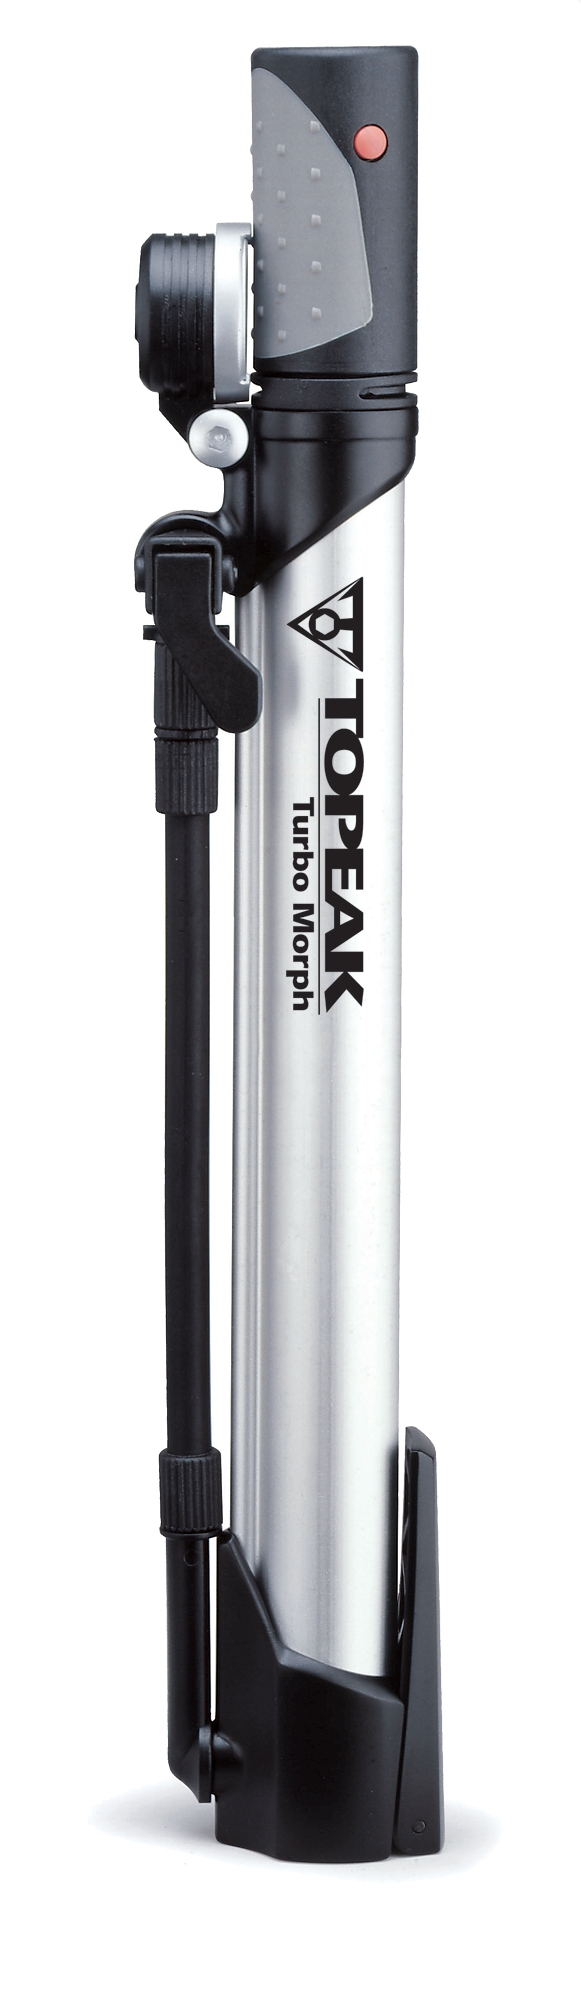 topeak morph mountain pump